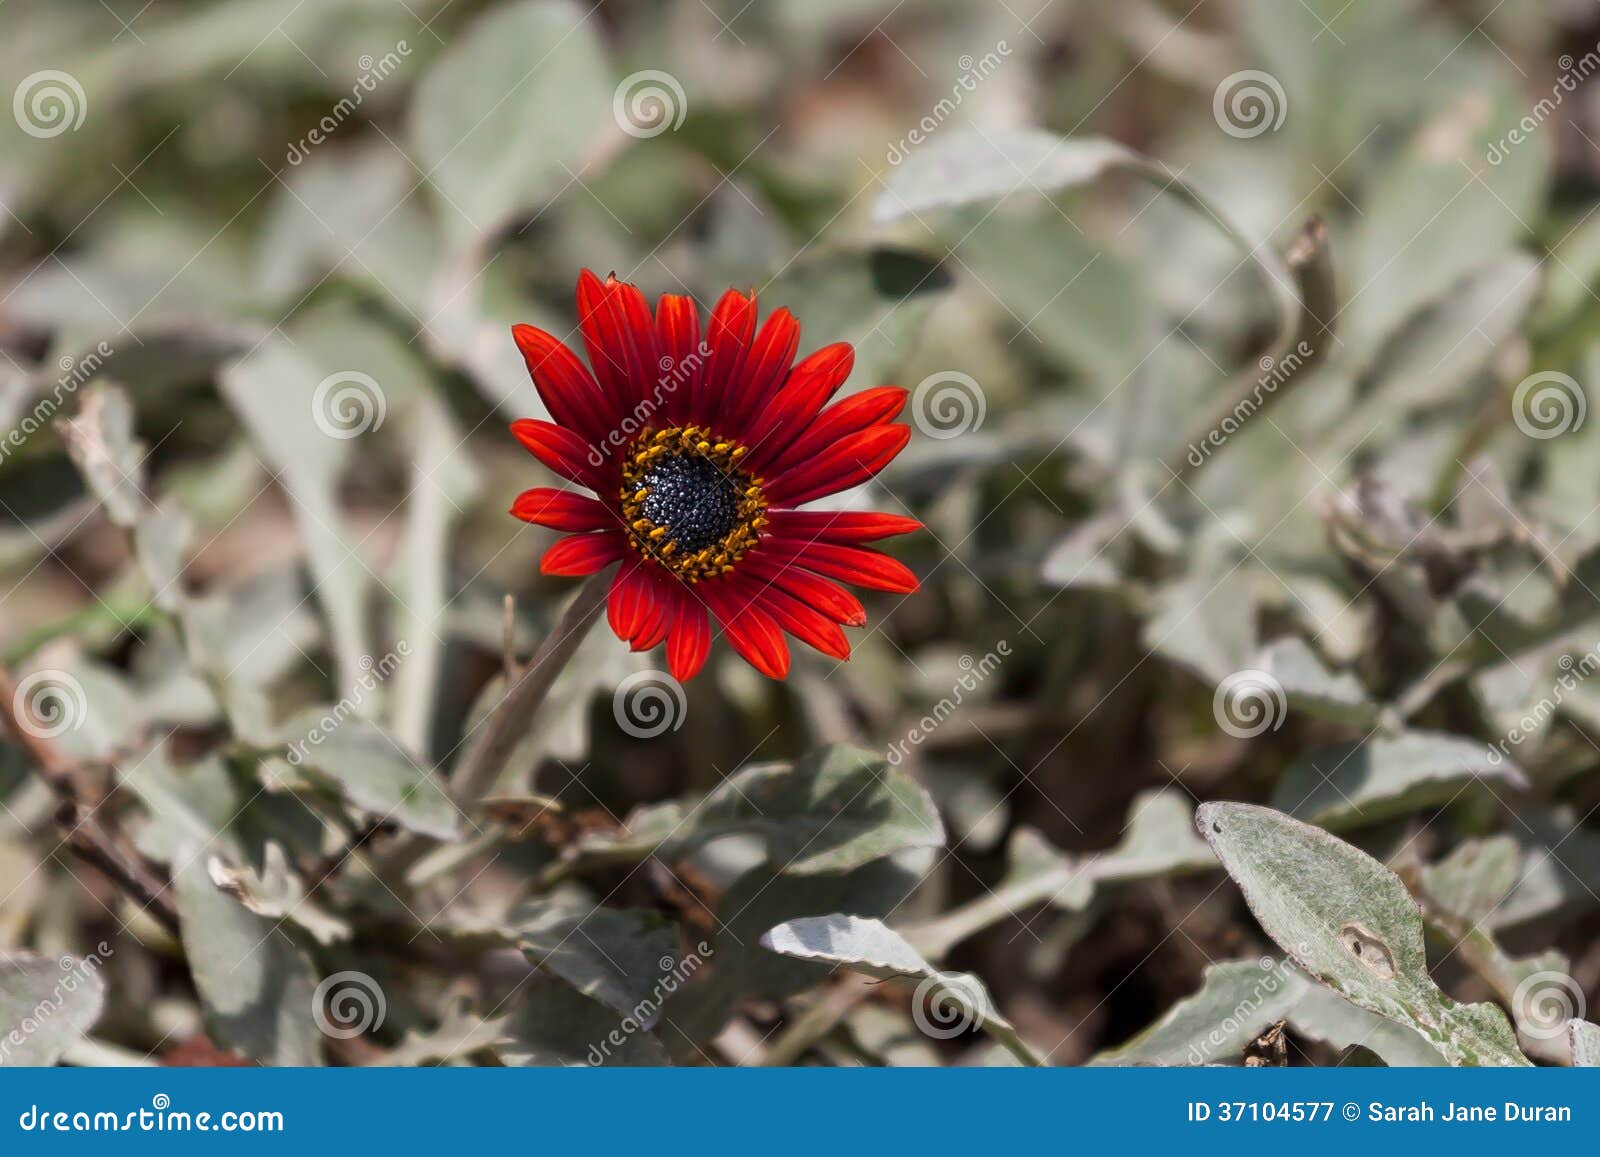 Dramatic Red Osteospermum Daisy Flower Stock Image Image Of Garden Grow